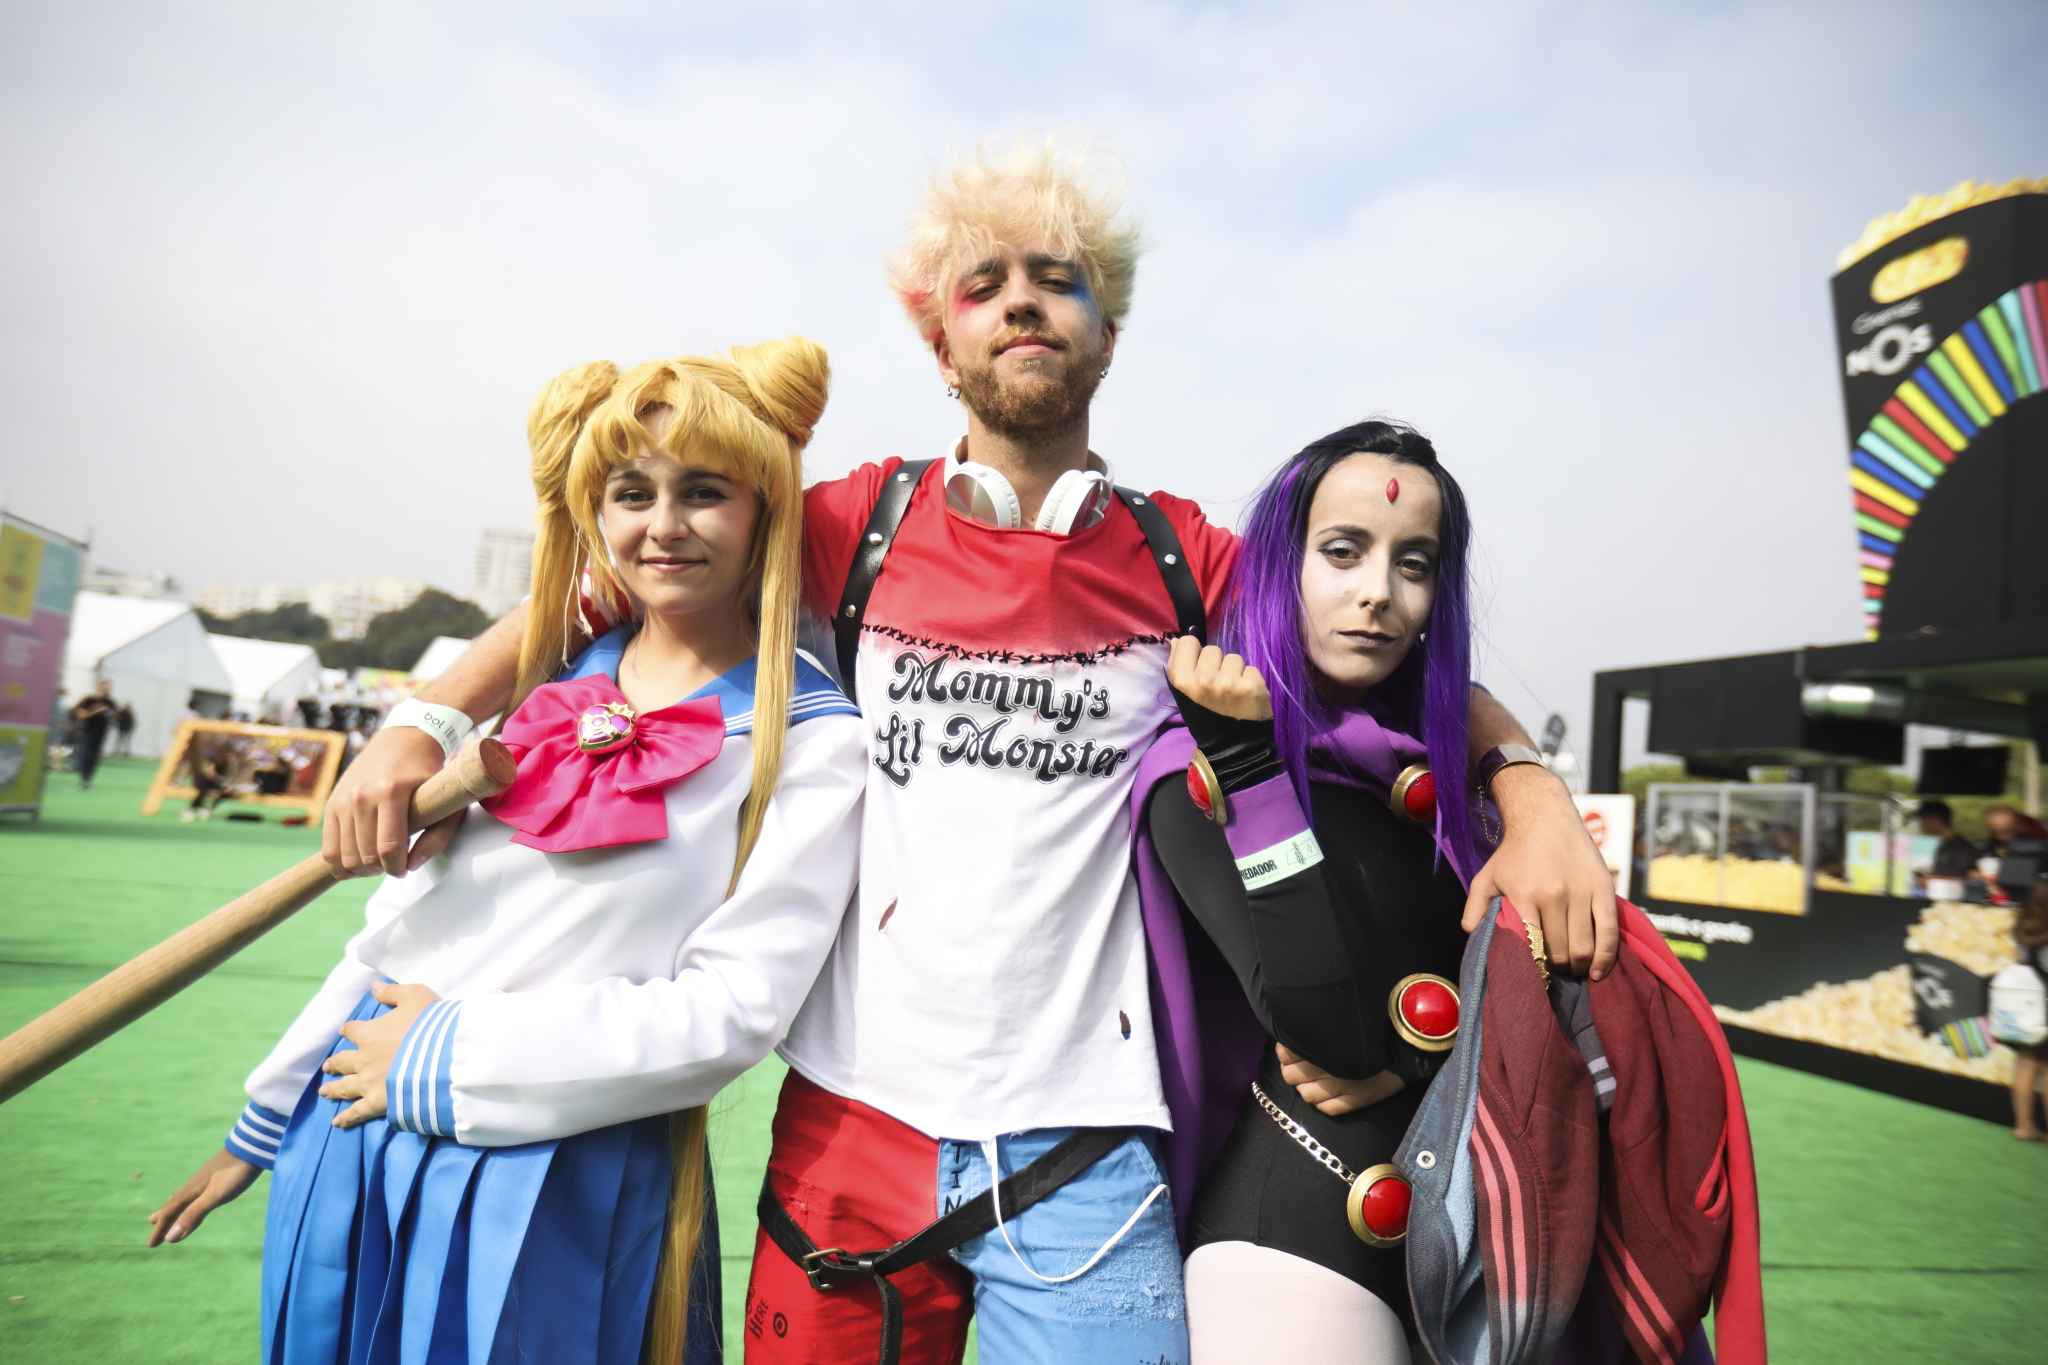 Conheça tudo sobre a Comic Con, o festival da cultura pop | Unibanco